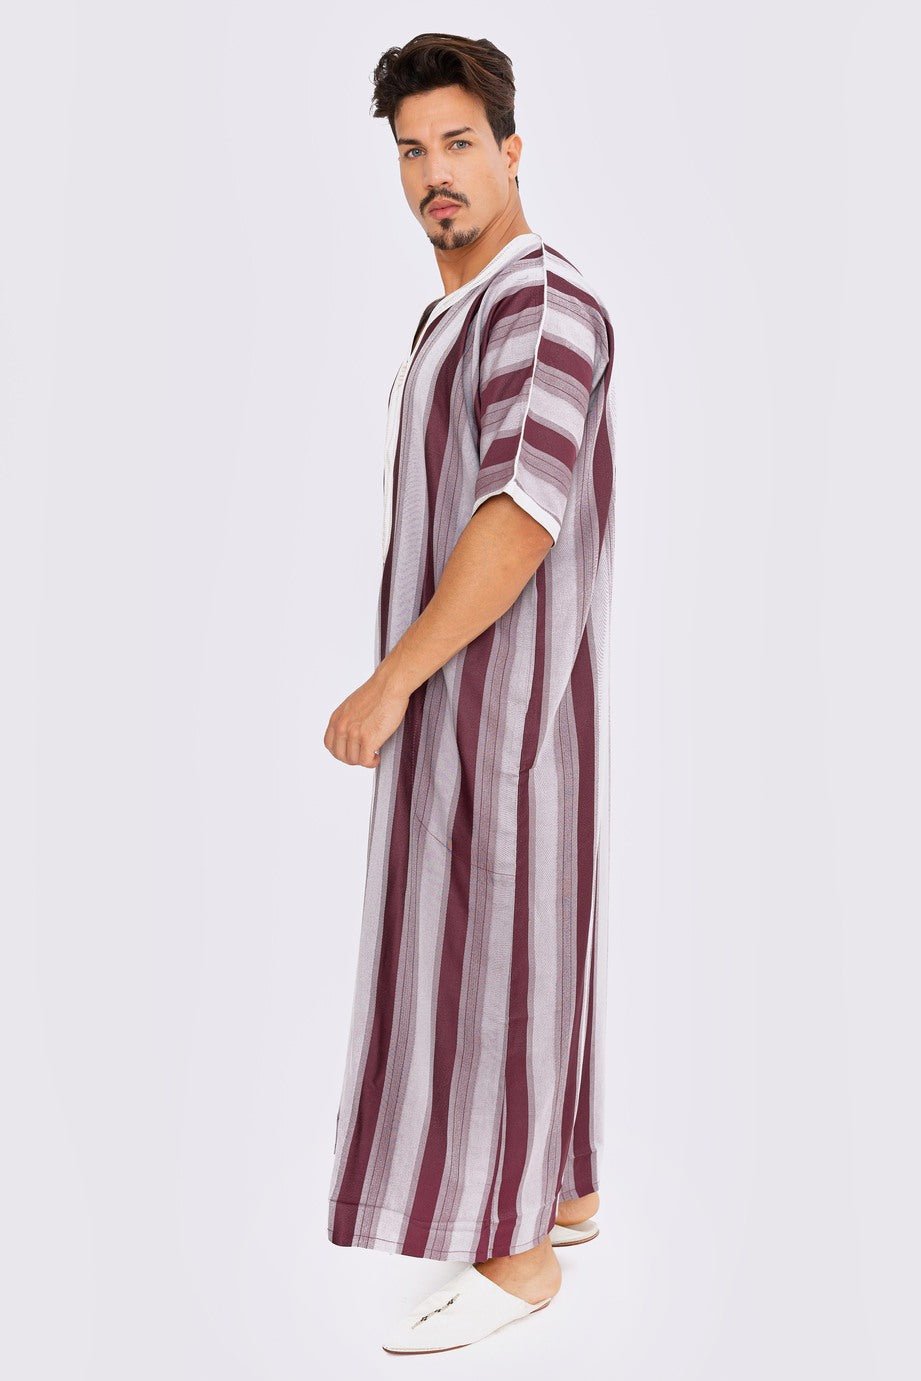 Gandoura Men's Short Sleeve Long Striped Thobe in Grey & Red